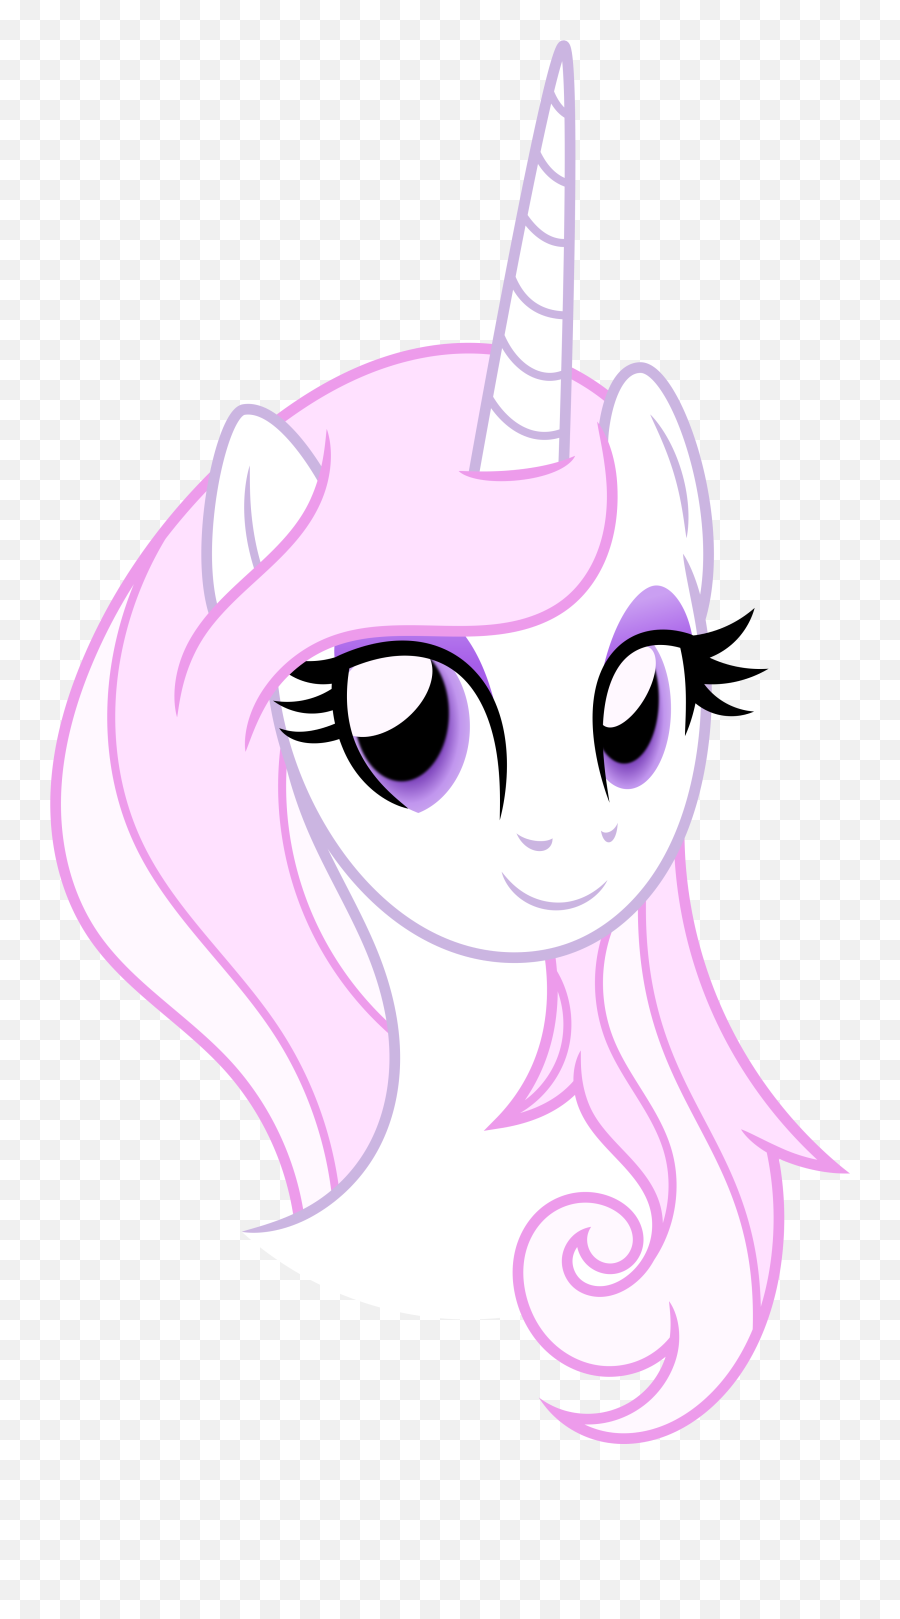 Pretty Pink Unicorn - Pink And White My Little Pony Clipart Mlp Fleur De Lis Pony Vector Emoji,Unicorn Face Clipart